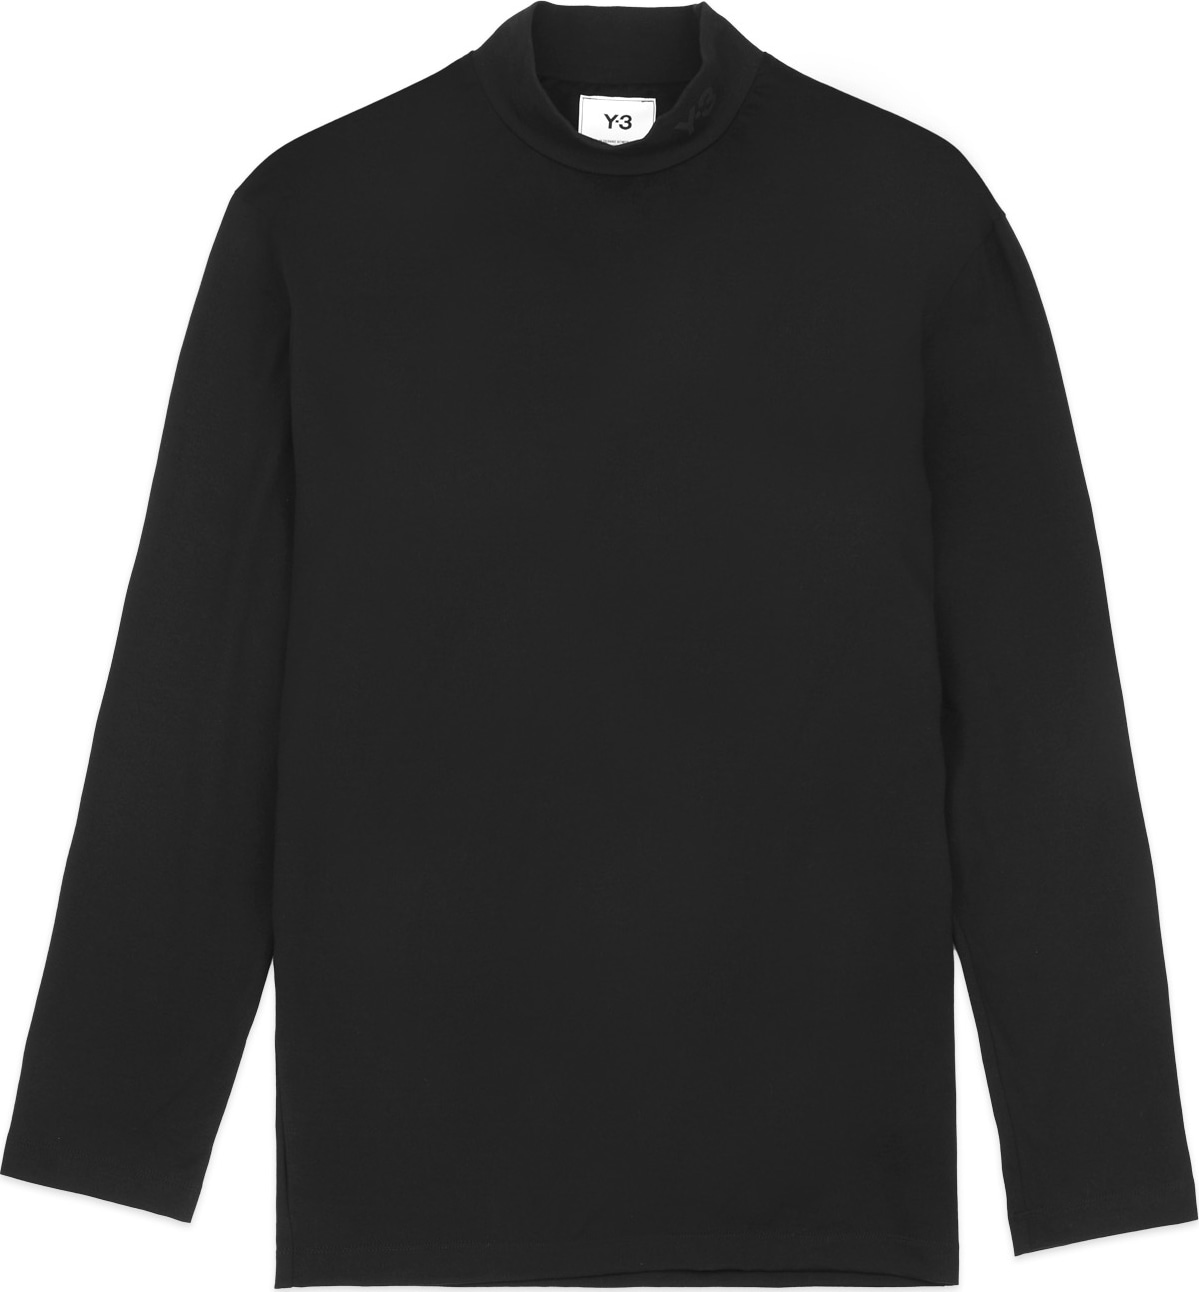 Y-3: Classic Long Sleeve Mock Neck T-Shirt - Black | influenceu